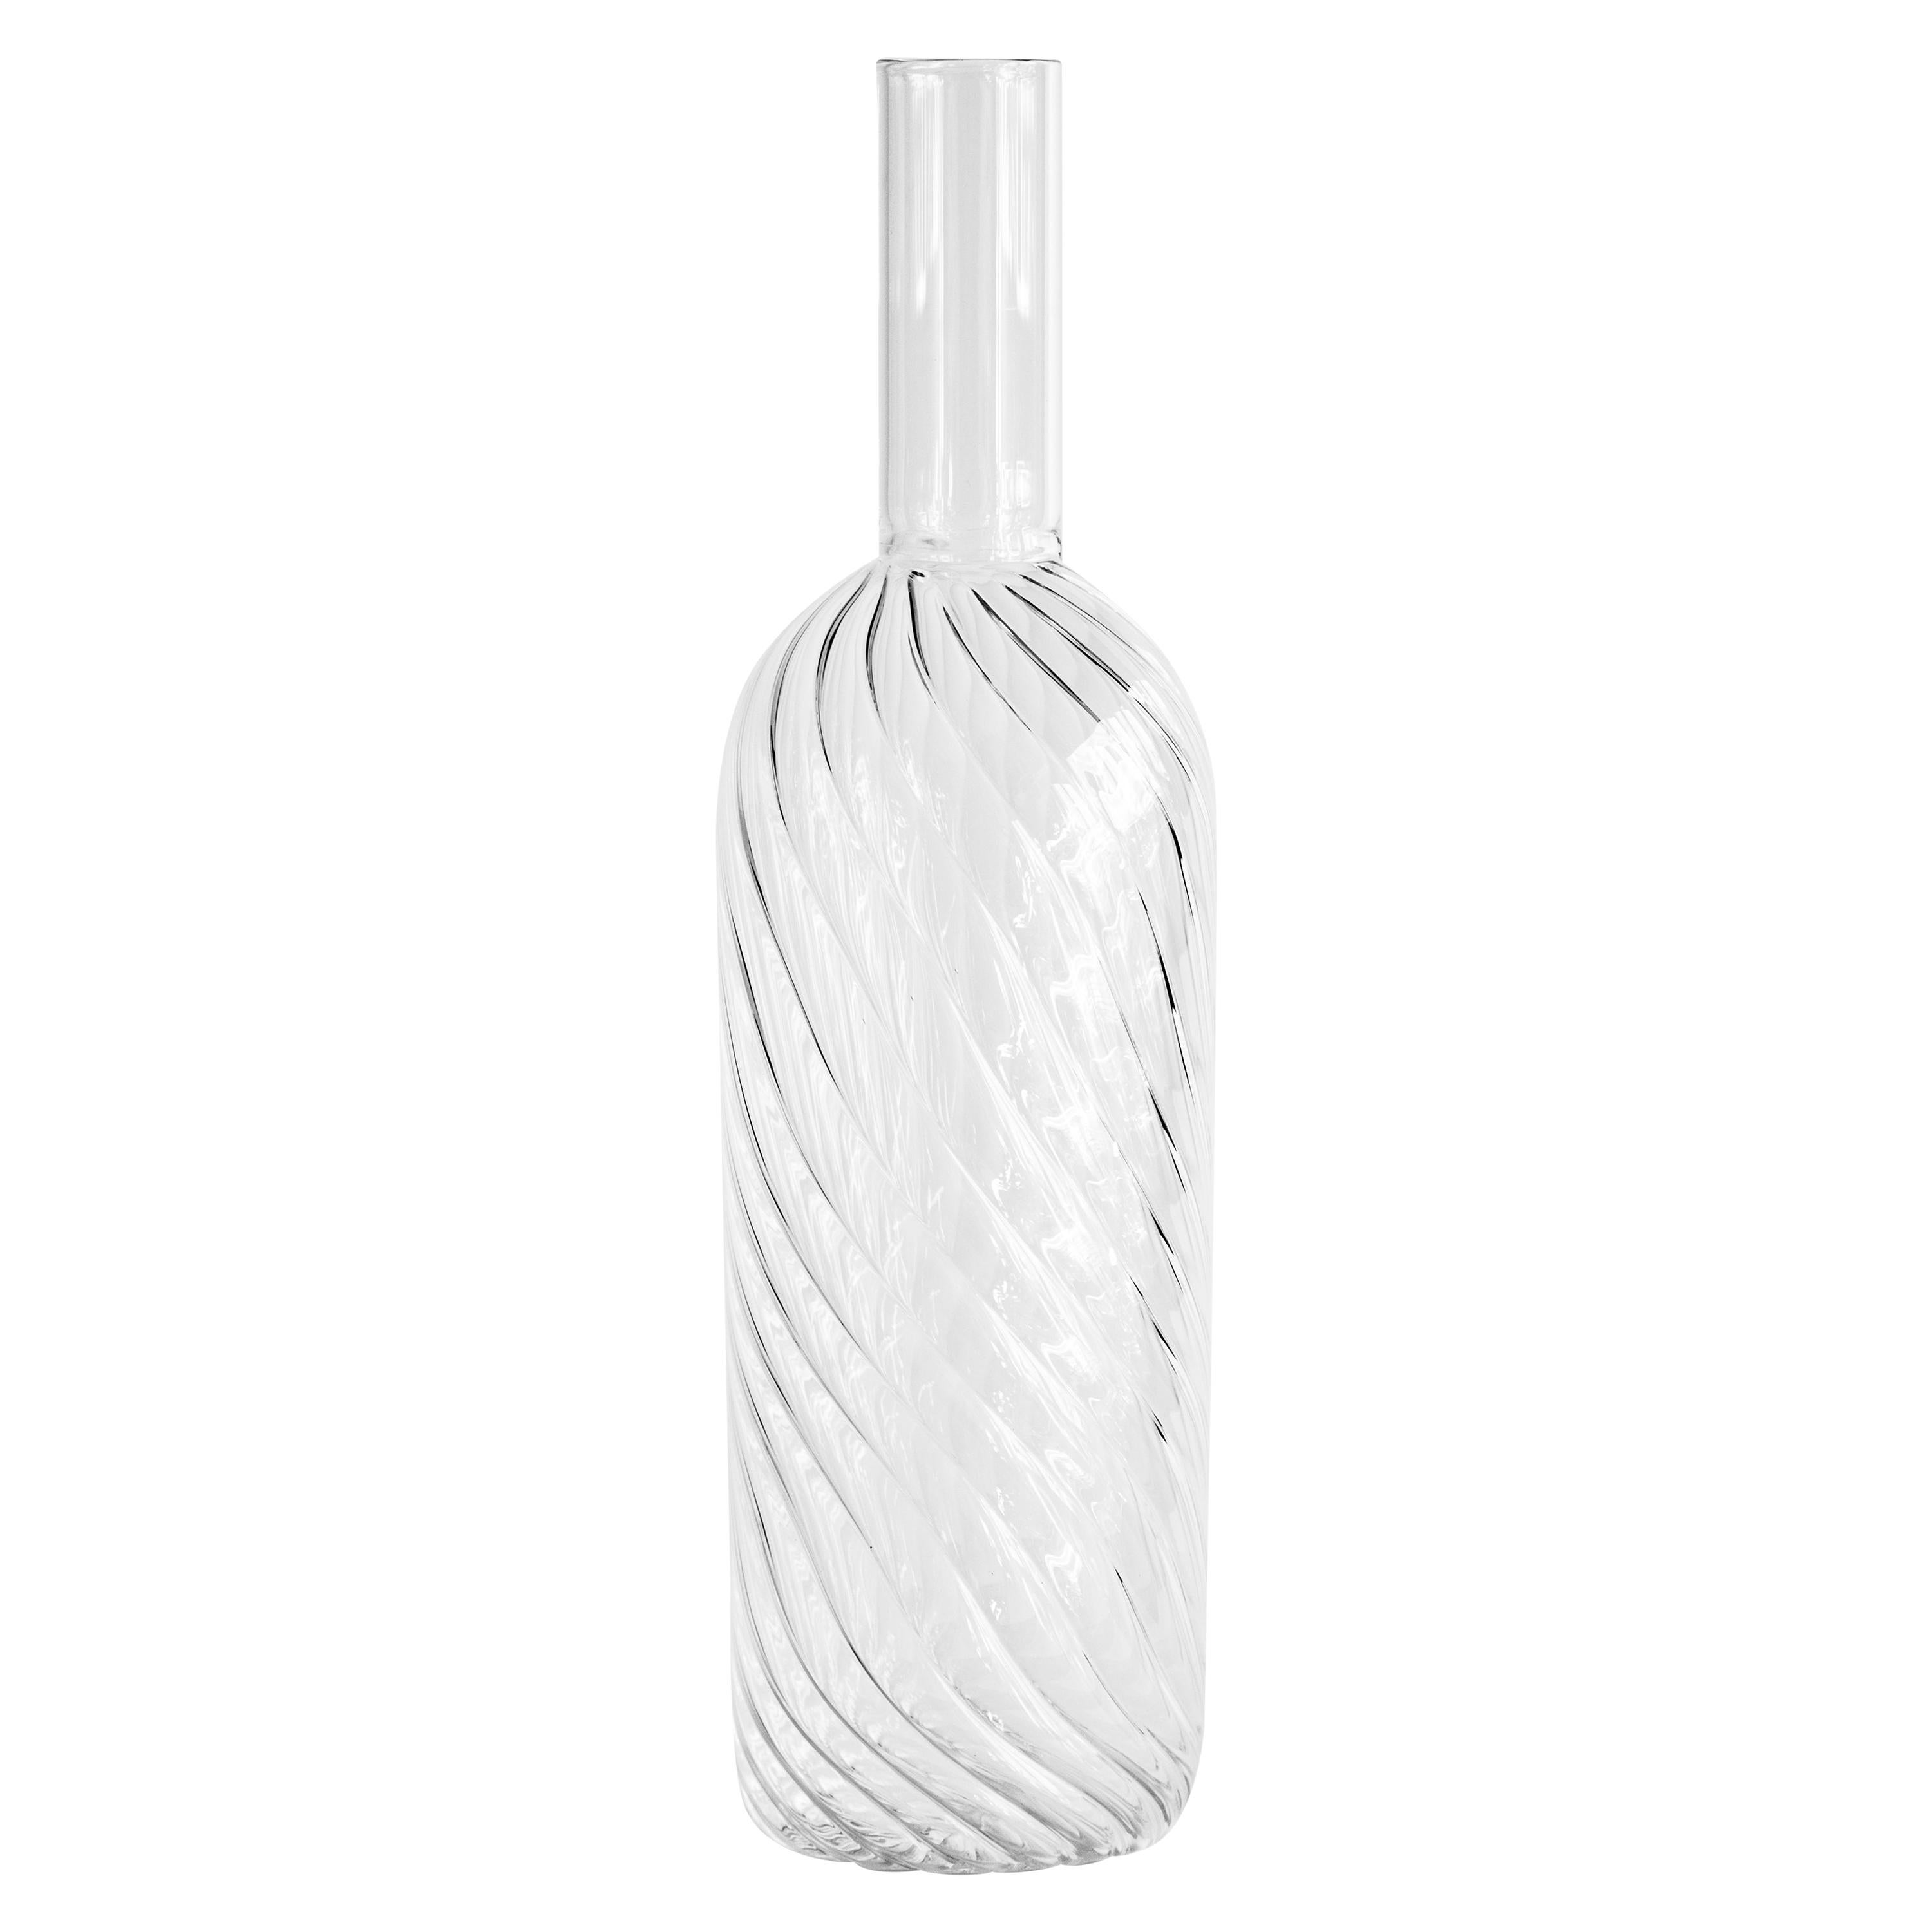 21st Century Blown Glass "Dafne Bottle" For Sale